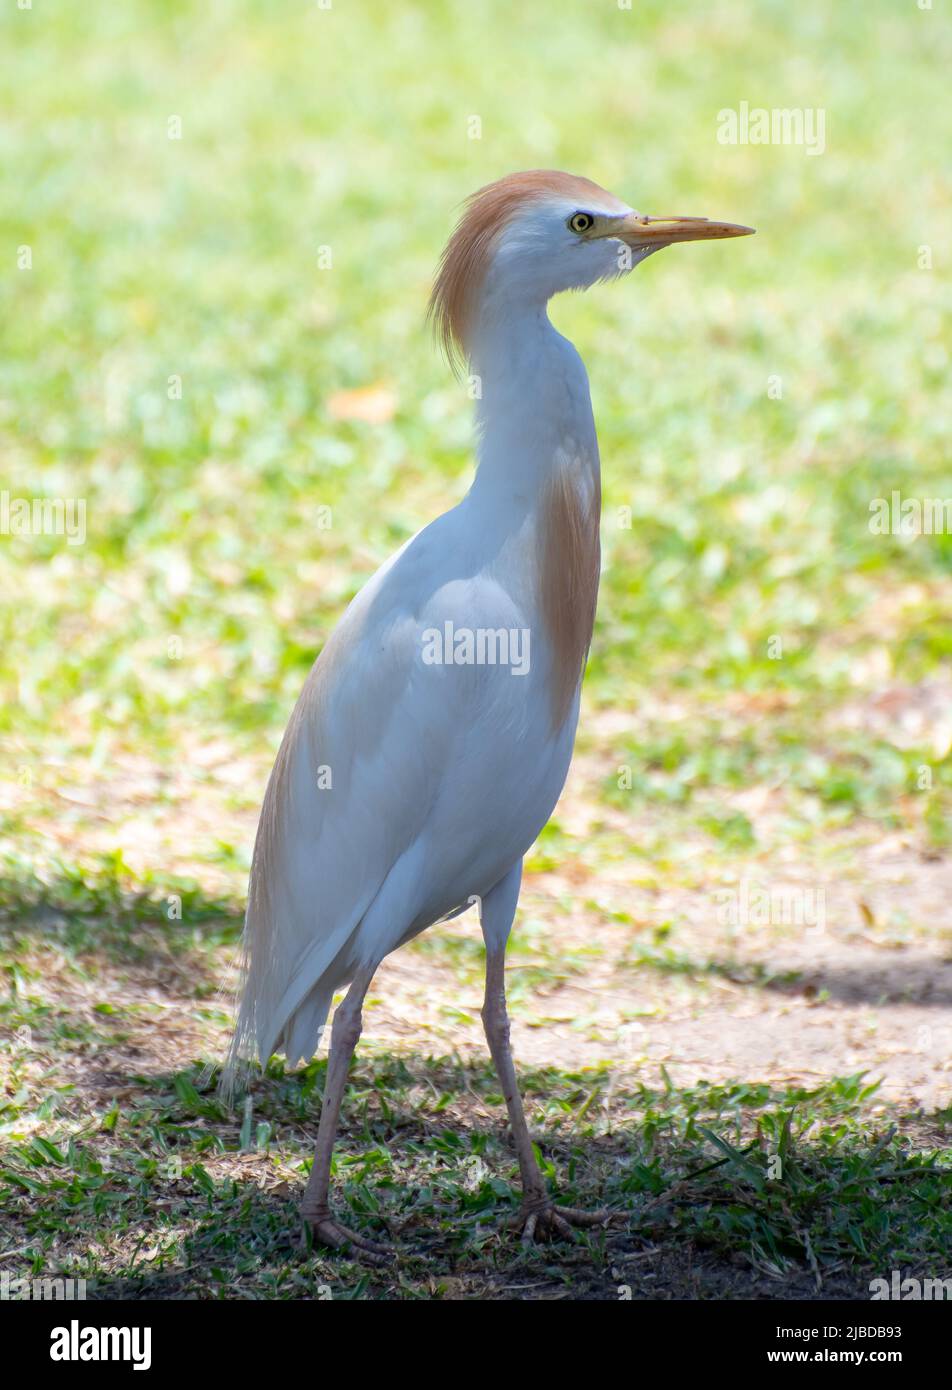 A portrait of a Cattle Egret Stock Photo